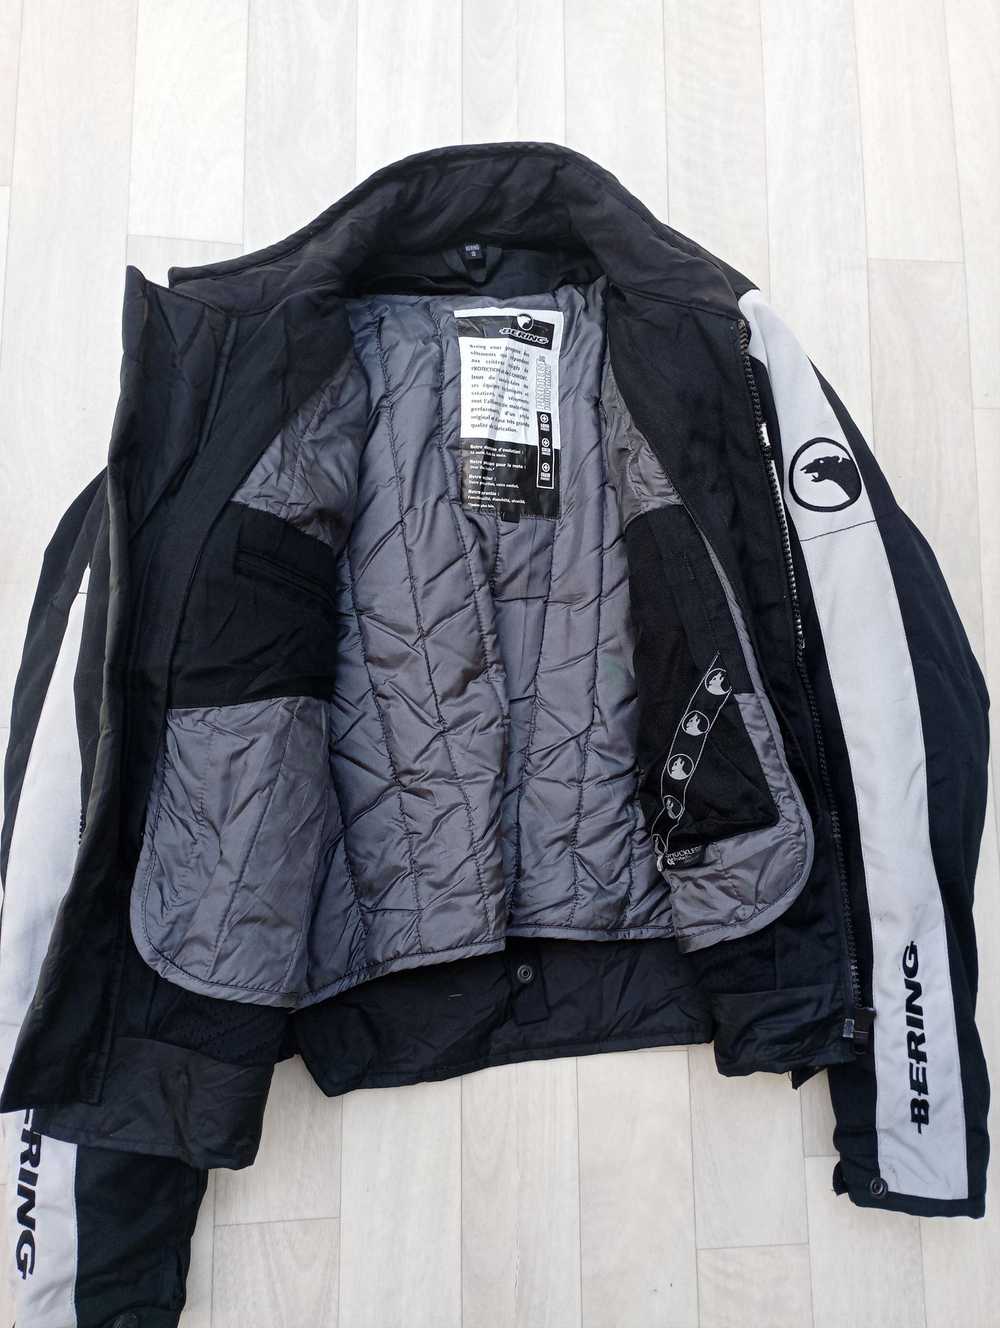 MOTO × Racing Bering motorcycle jacket size S - image 6